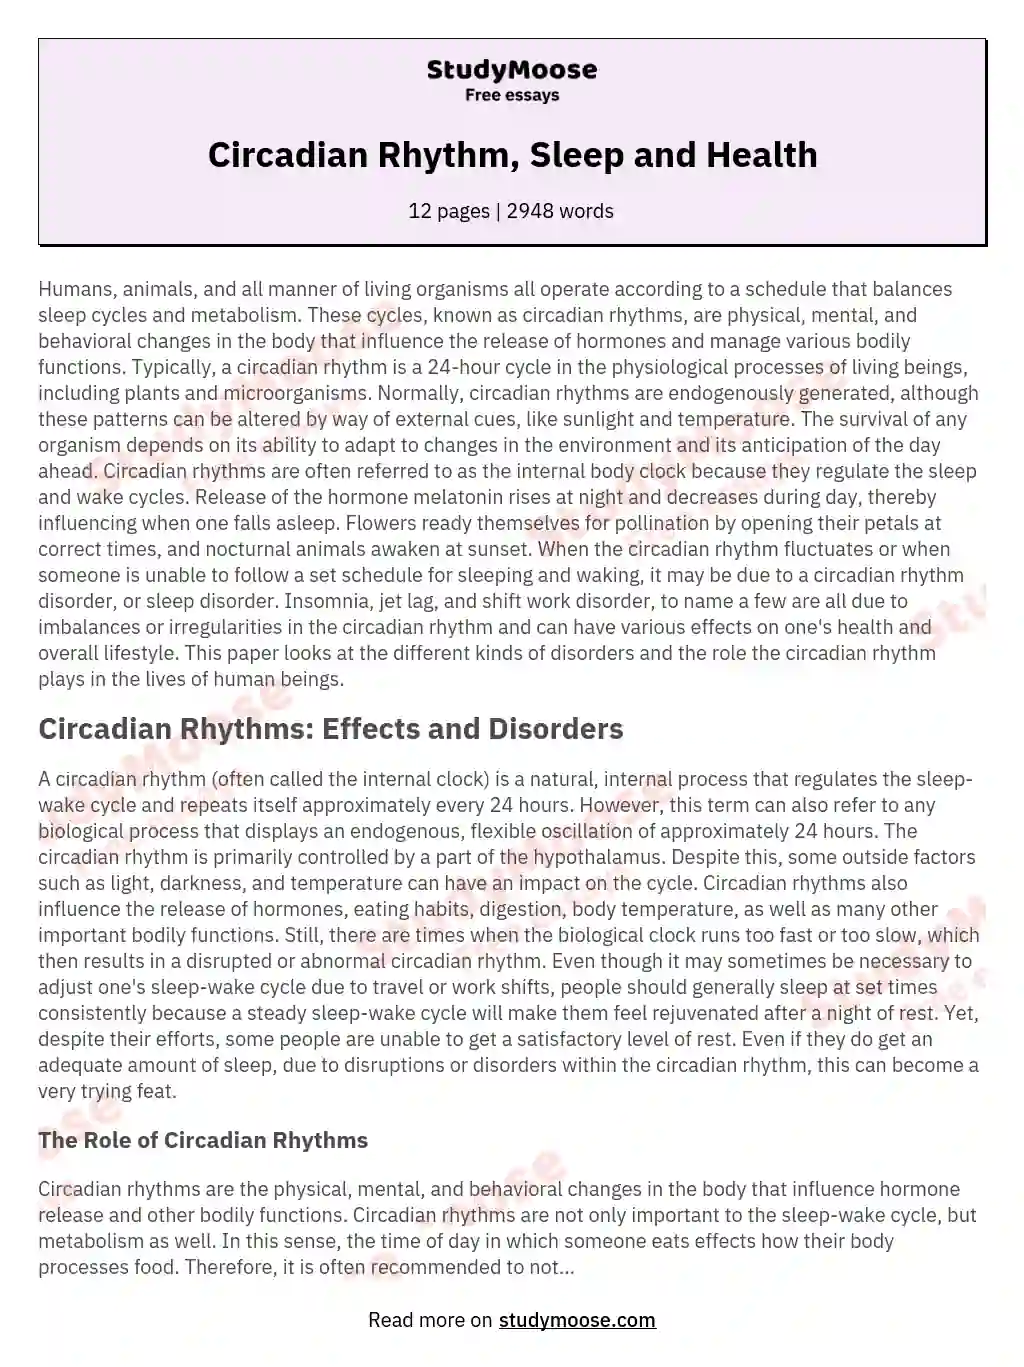 Circadian Rhythm, Sleep and Health essay